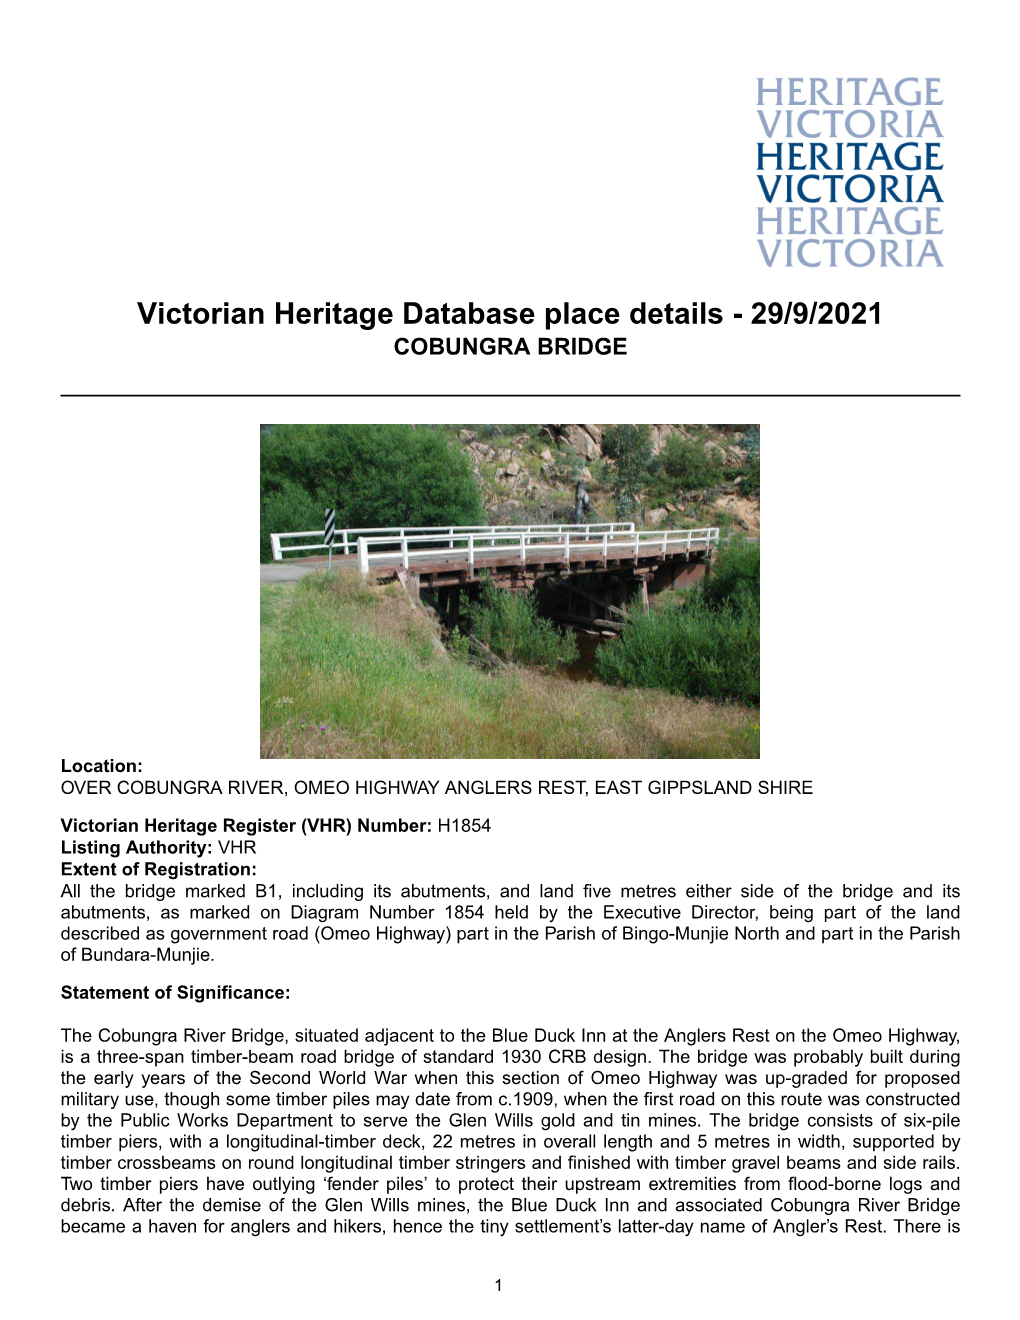 Victorian Heritage Database Place Details - 29/9/2021 COBUNGRA BRIDGE